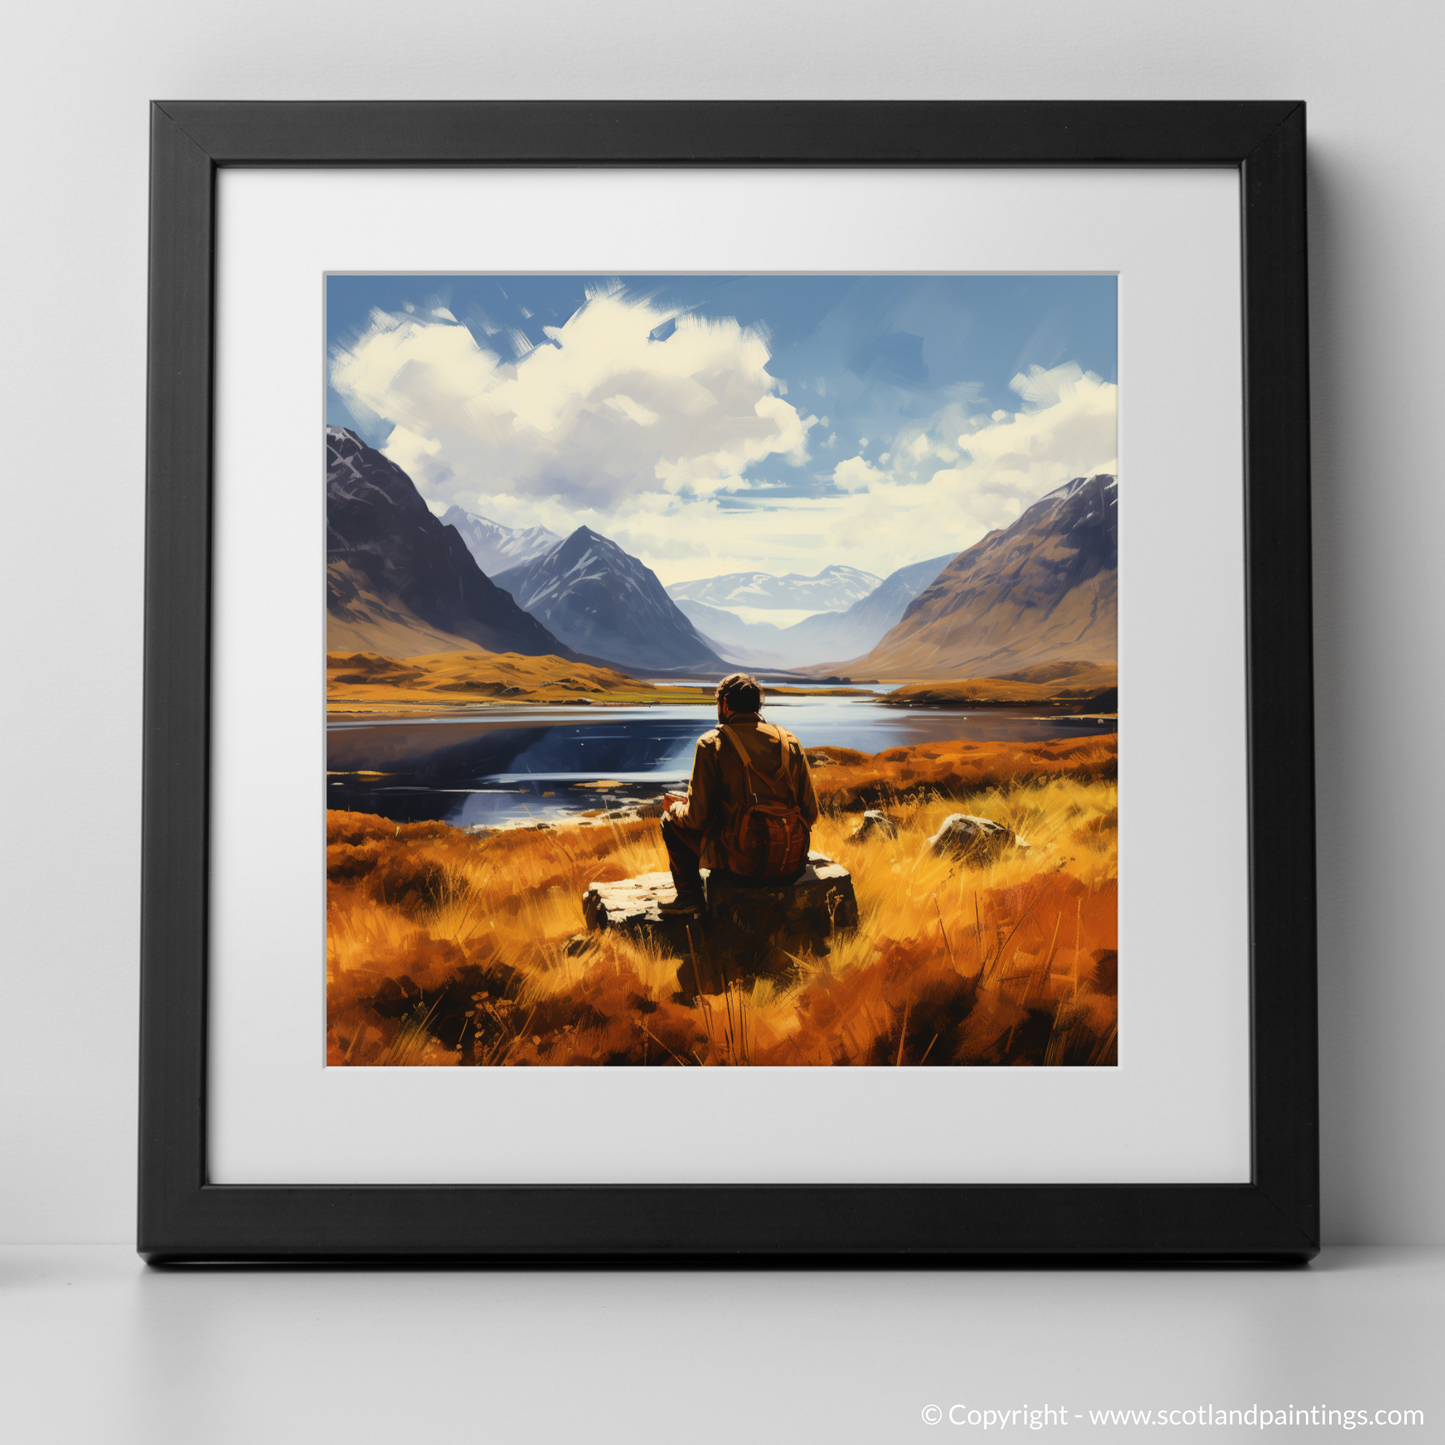 Satchel Sketcher in the Majestic Glencoe Highlands